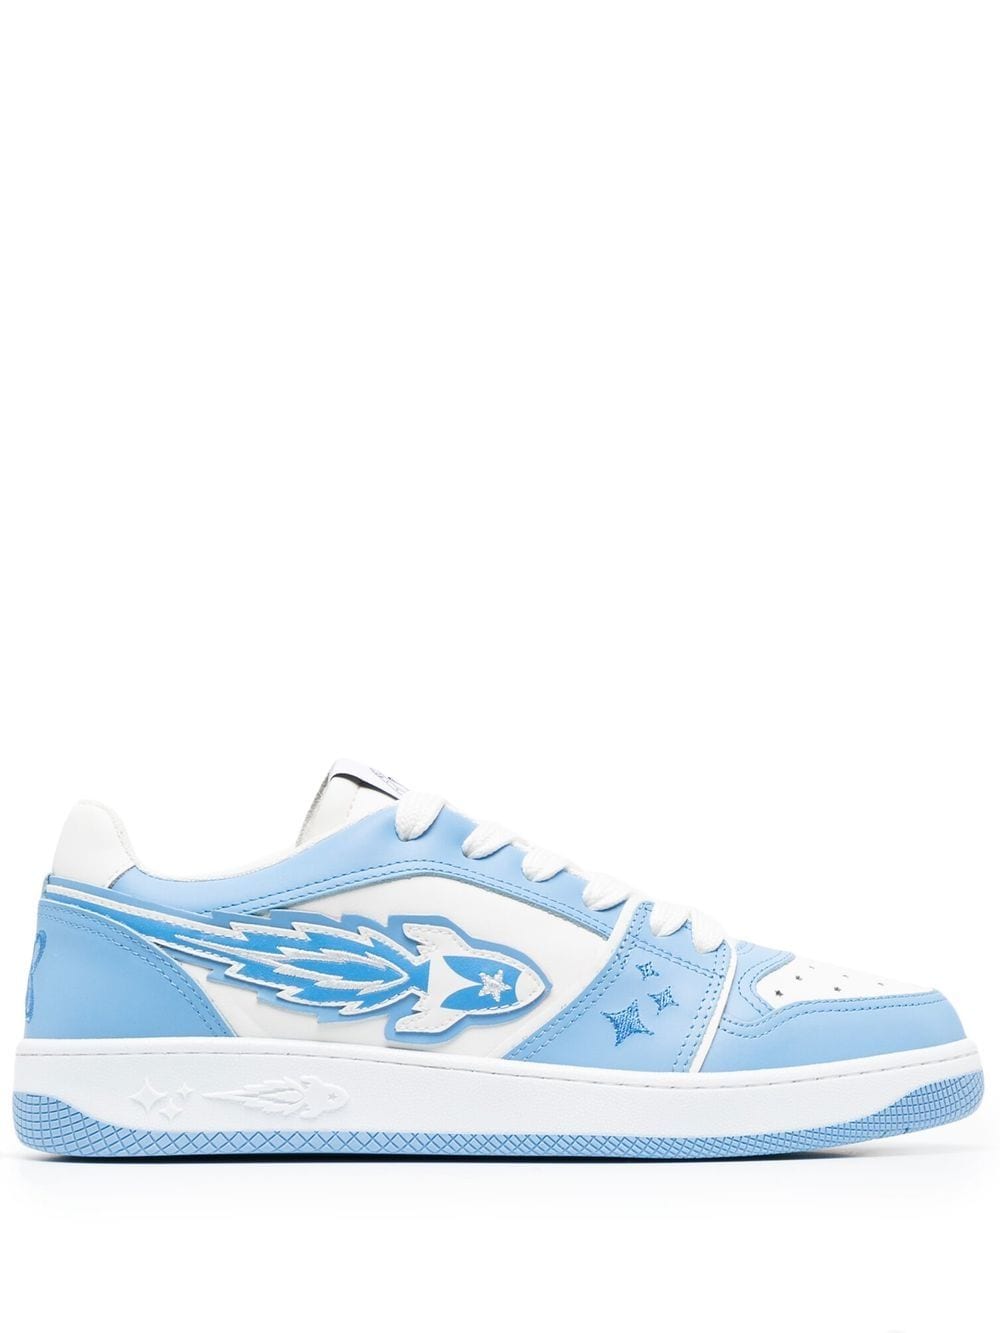 White/light blue logo-detail leather sneakers